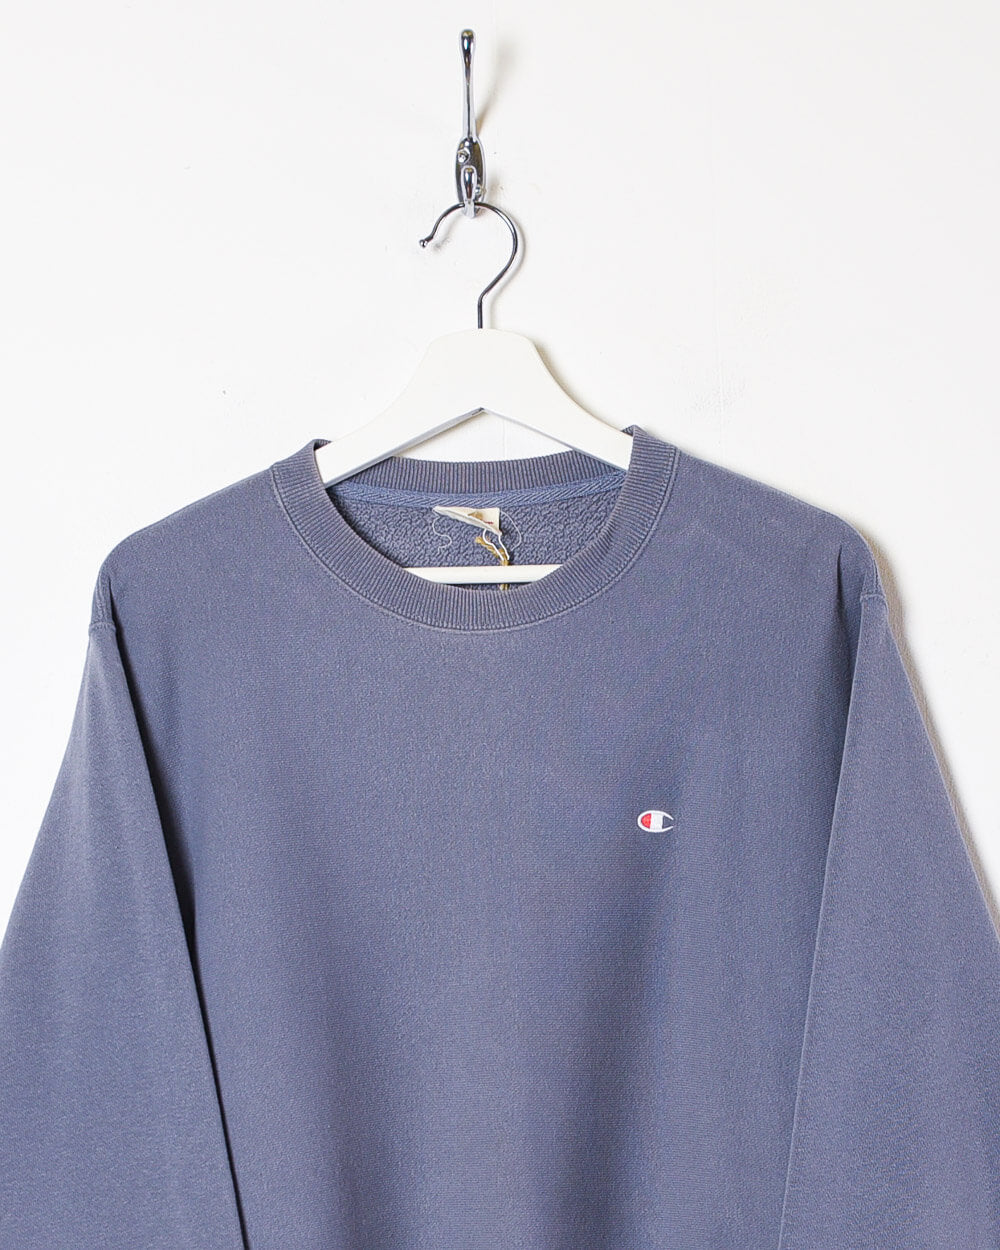 Blue Champion Reverse Weave Sweatshirt - Small